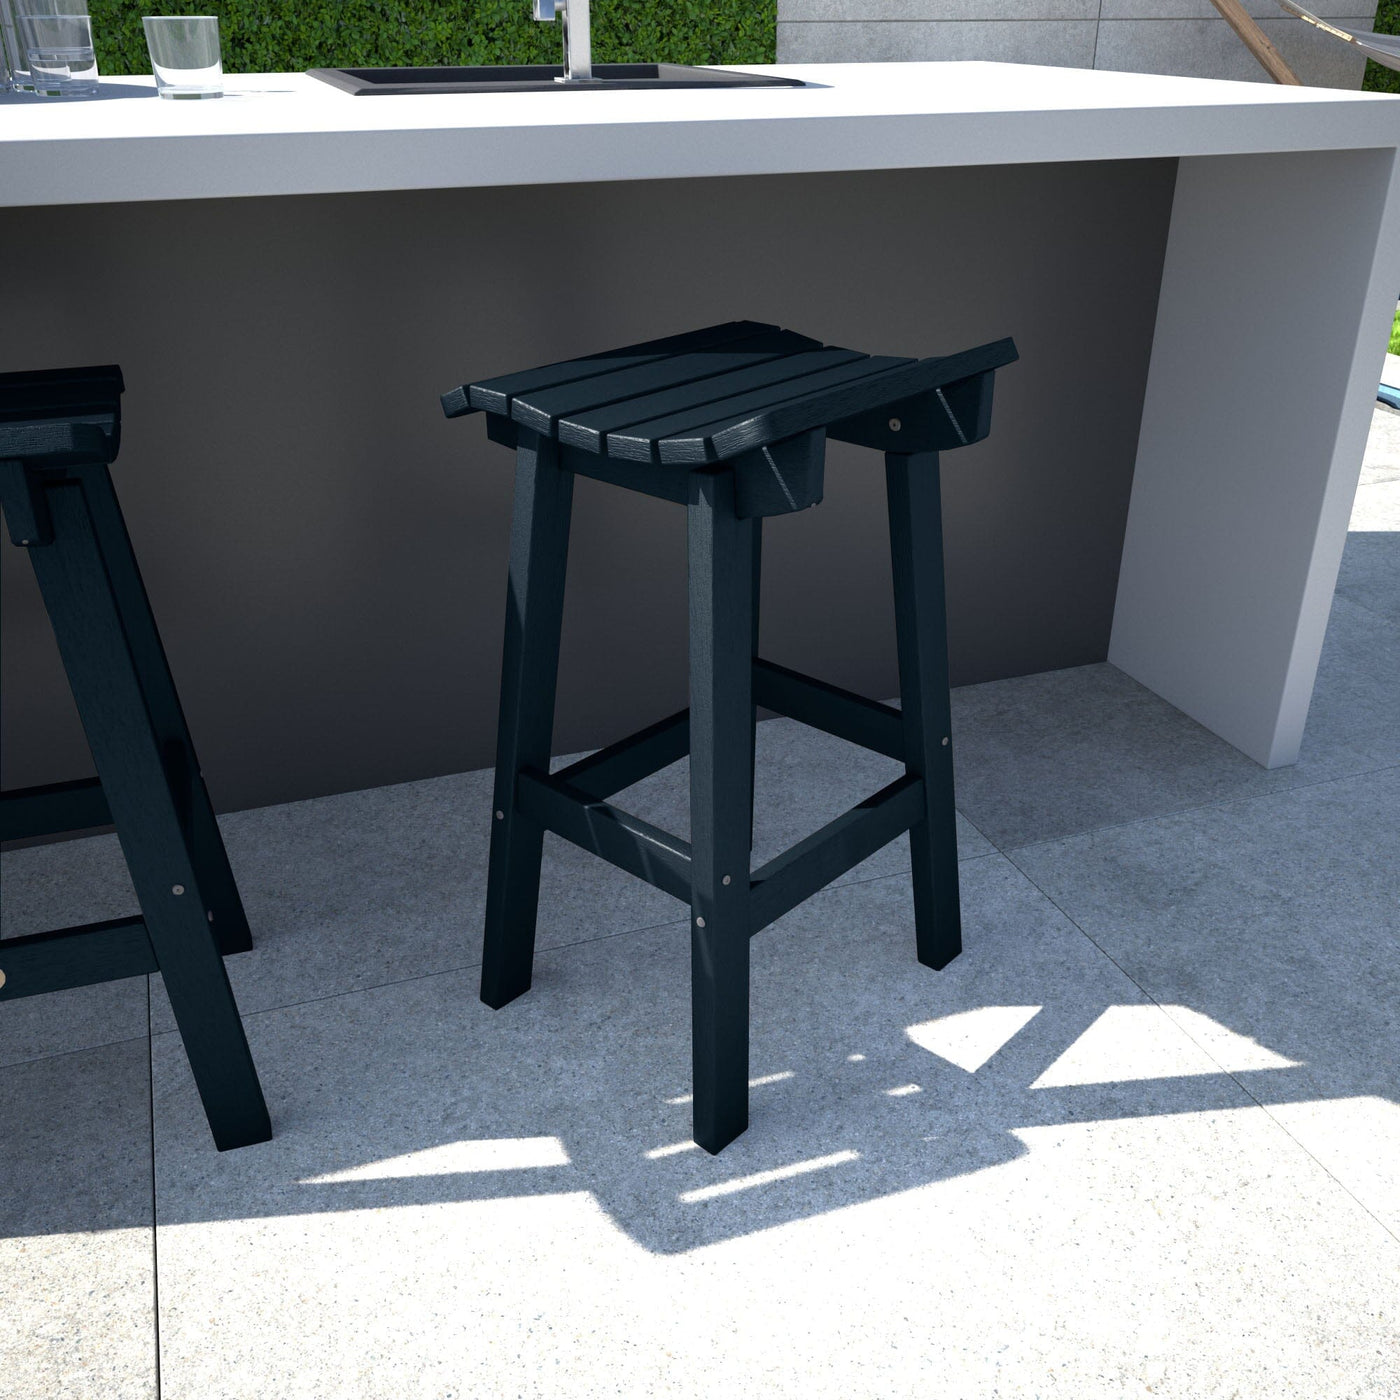 Dark blue Summit Bar Stool in outdoor kitchen area